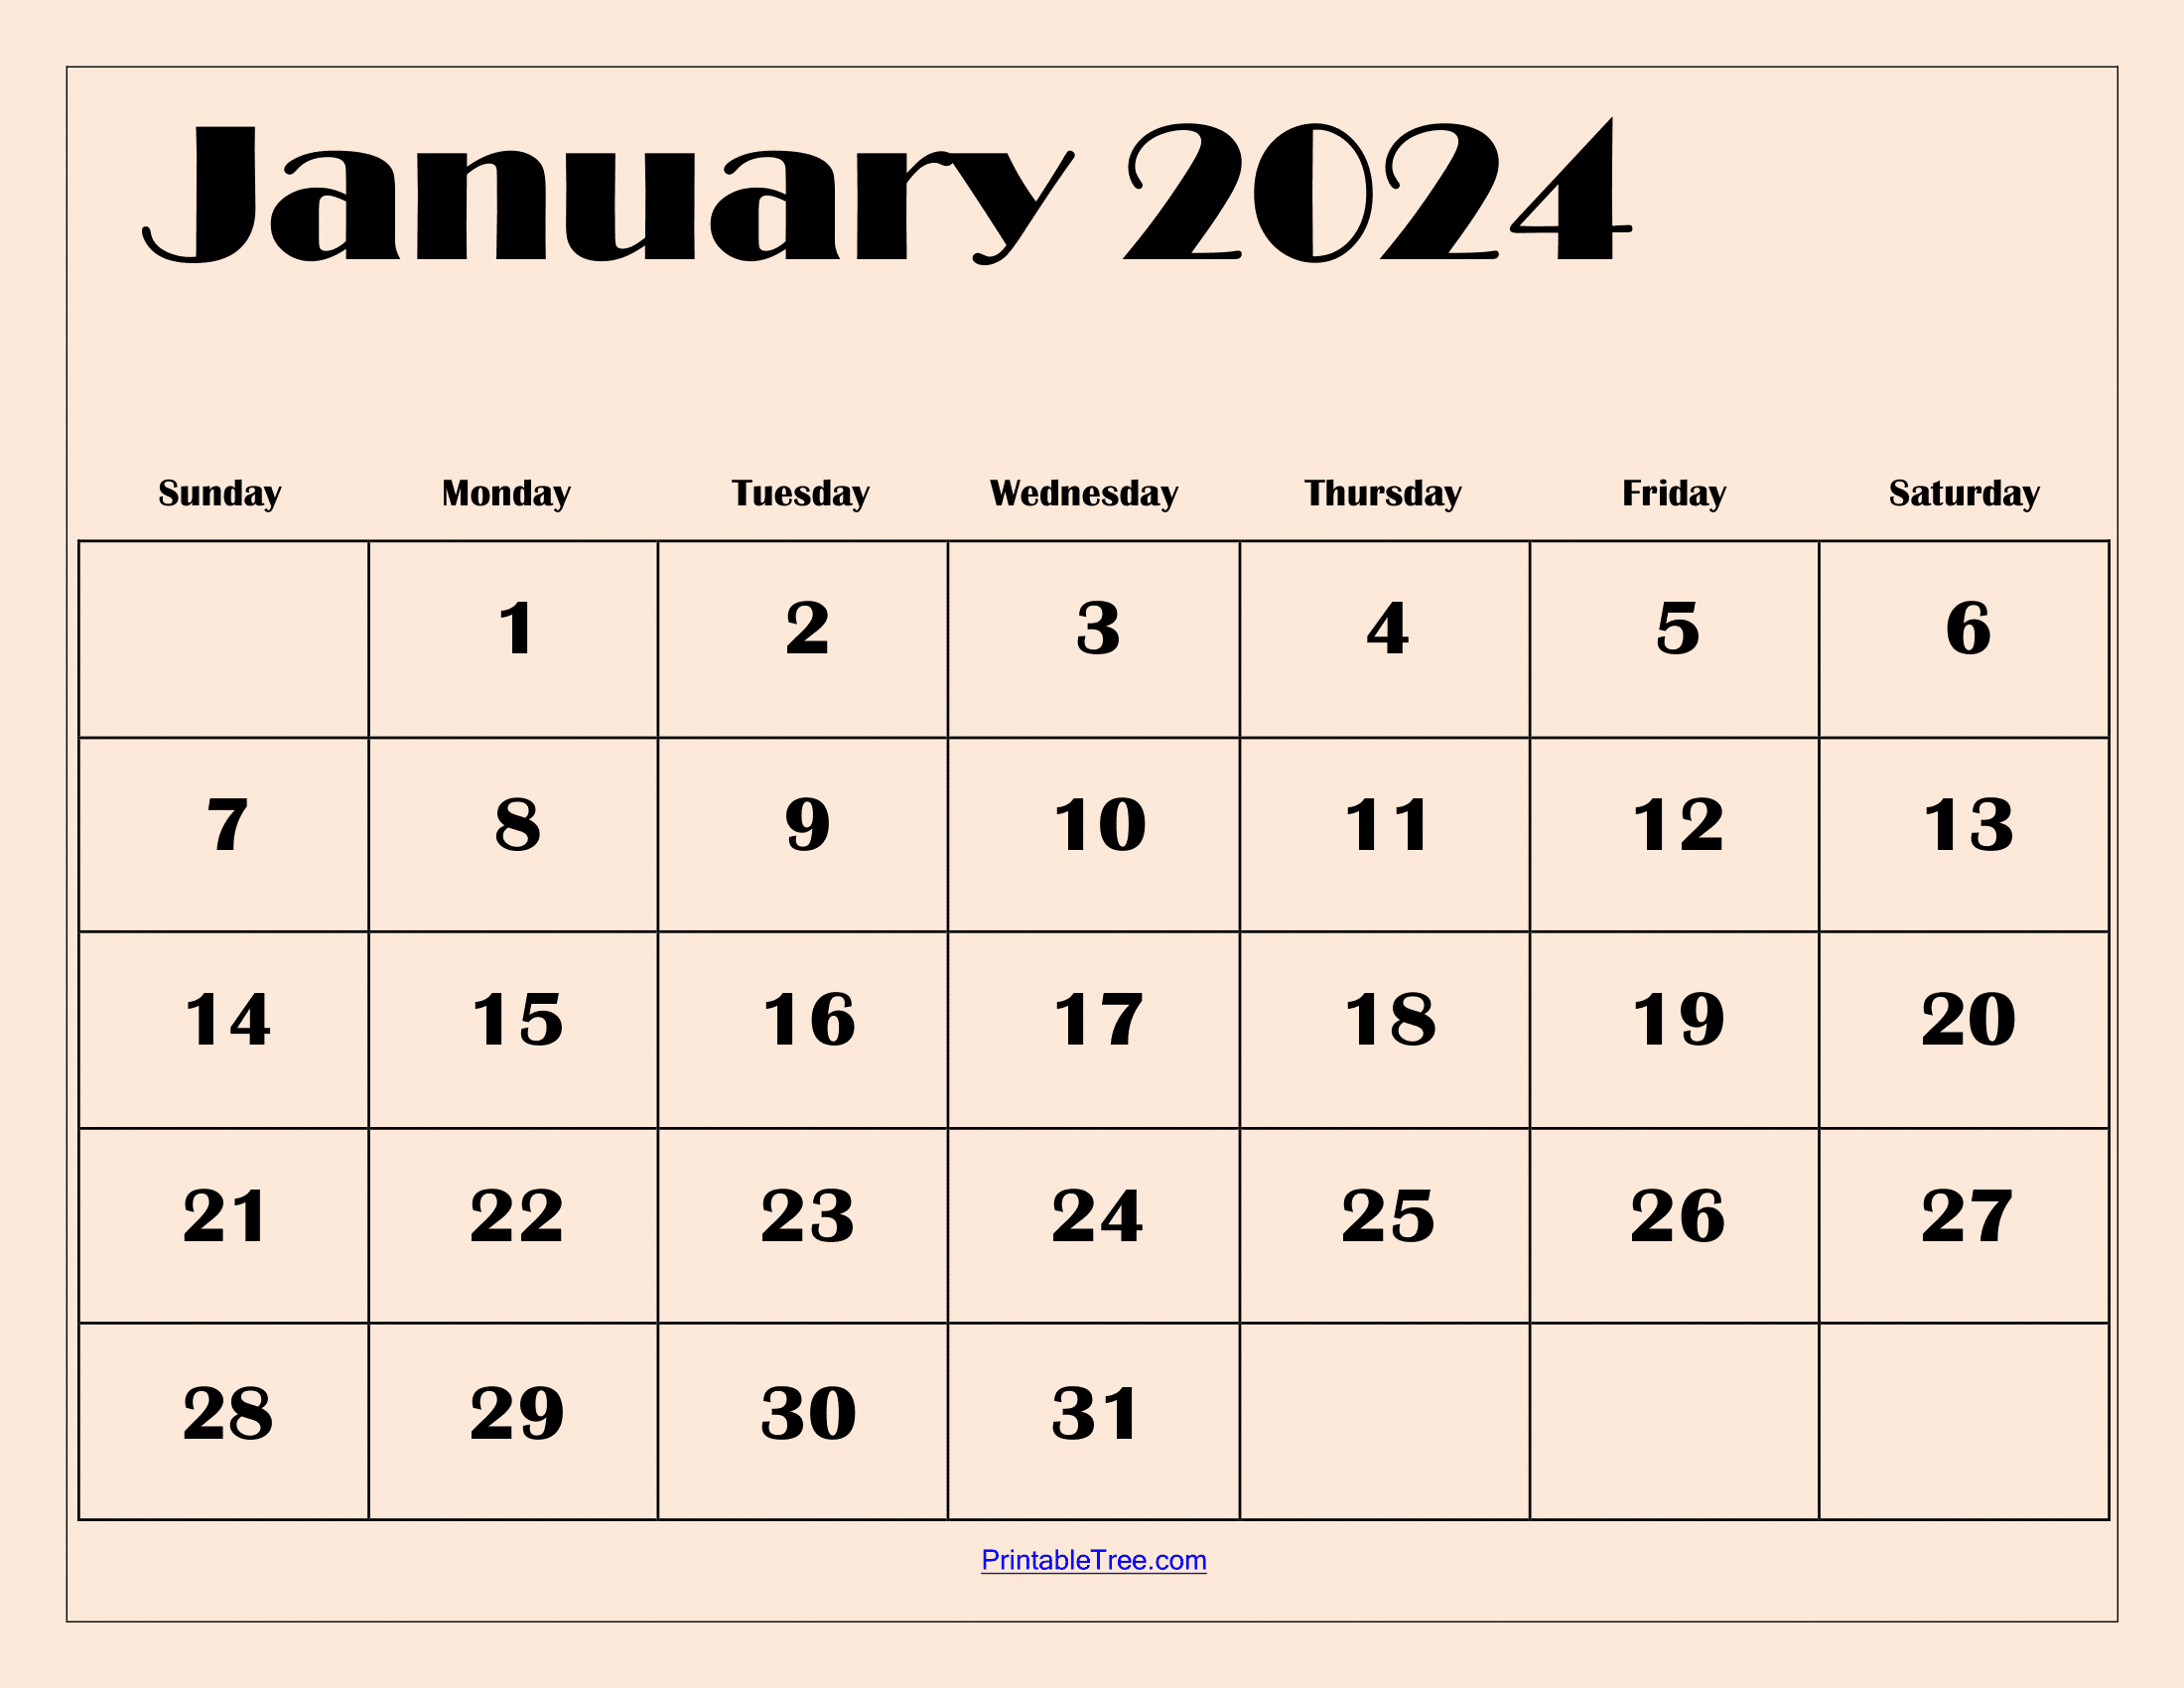 January 2024 Calendar Printable Pdf Template With Holidays for January 2024 Printable Calendar Cute